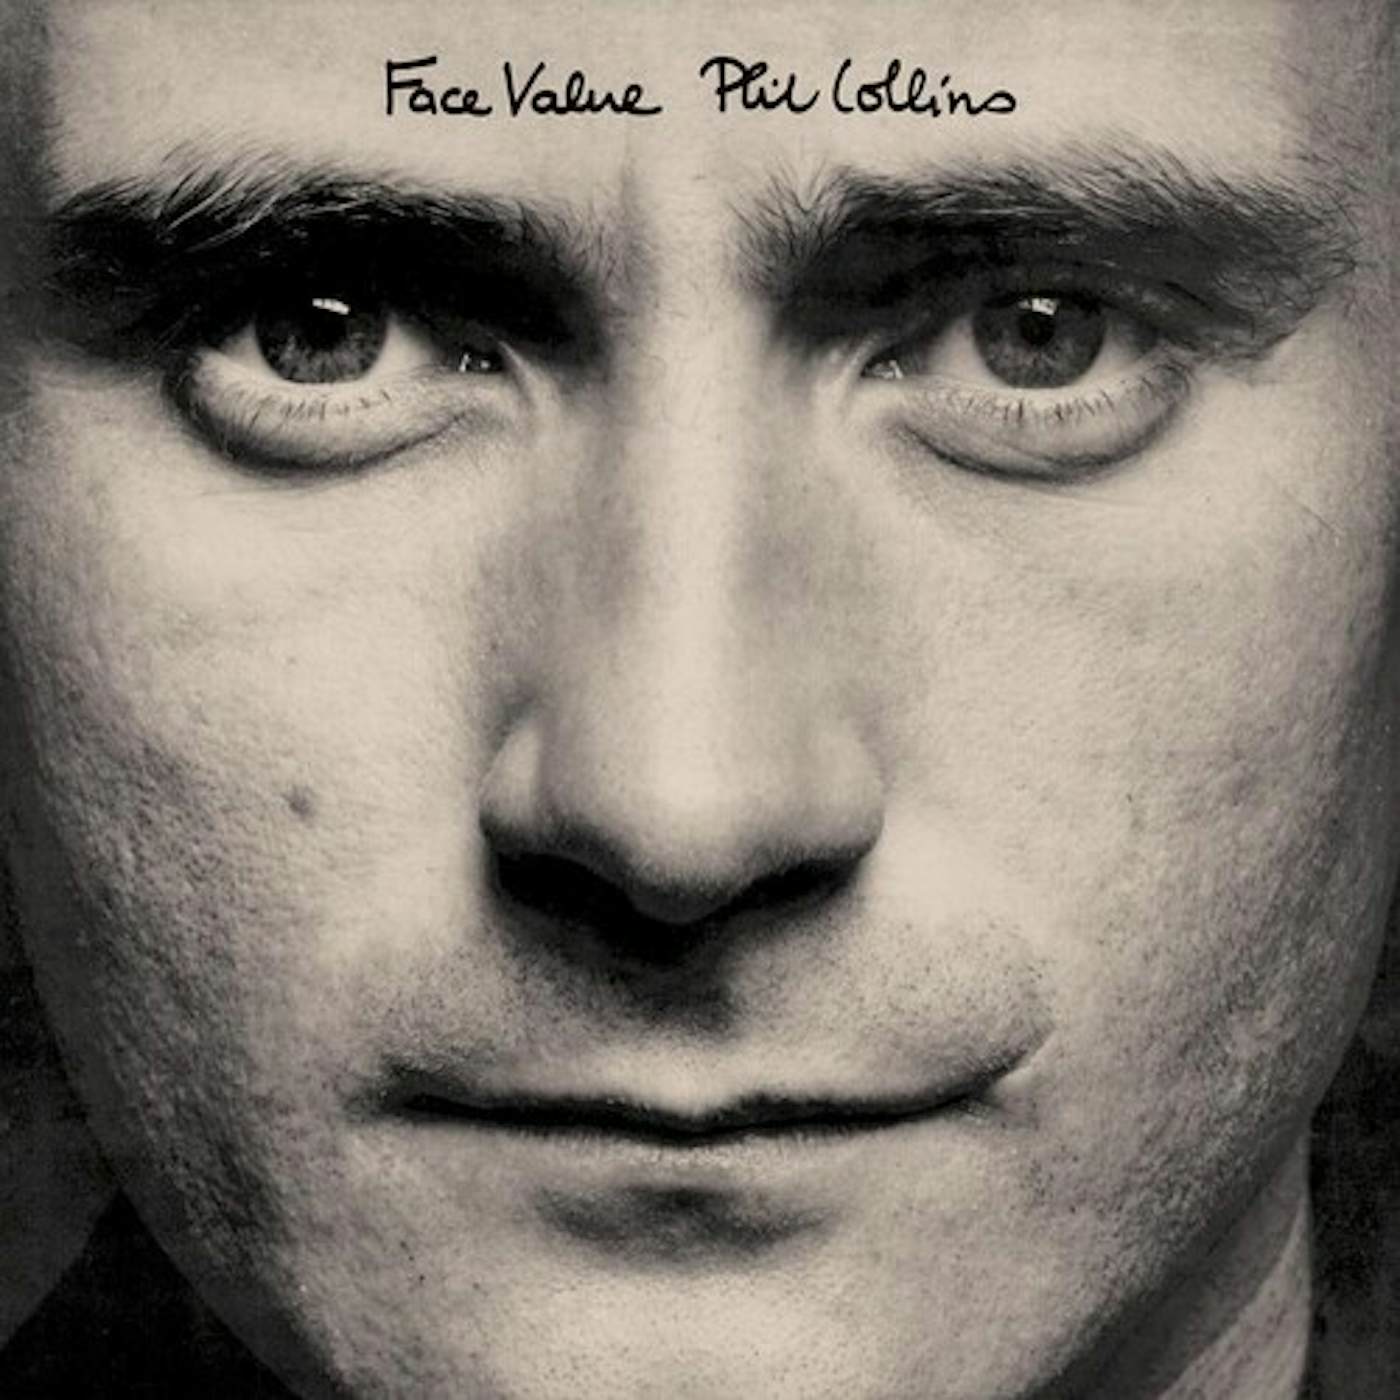 Phil Collins Face Value Vinyl Record